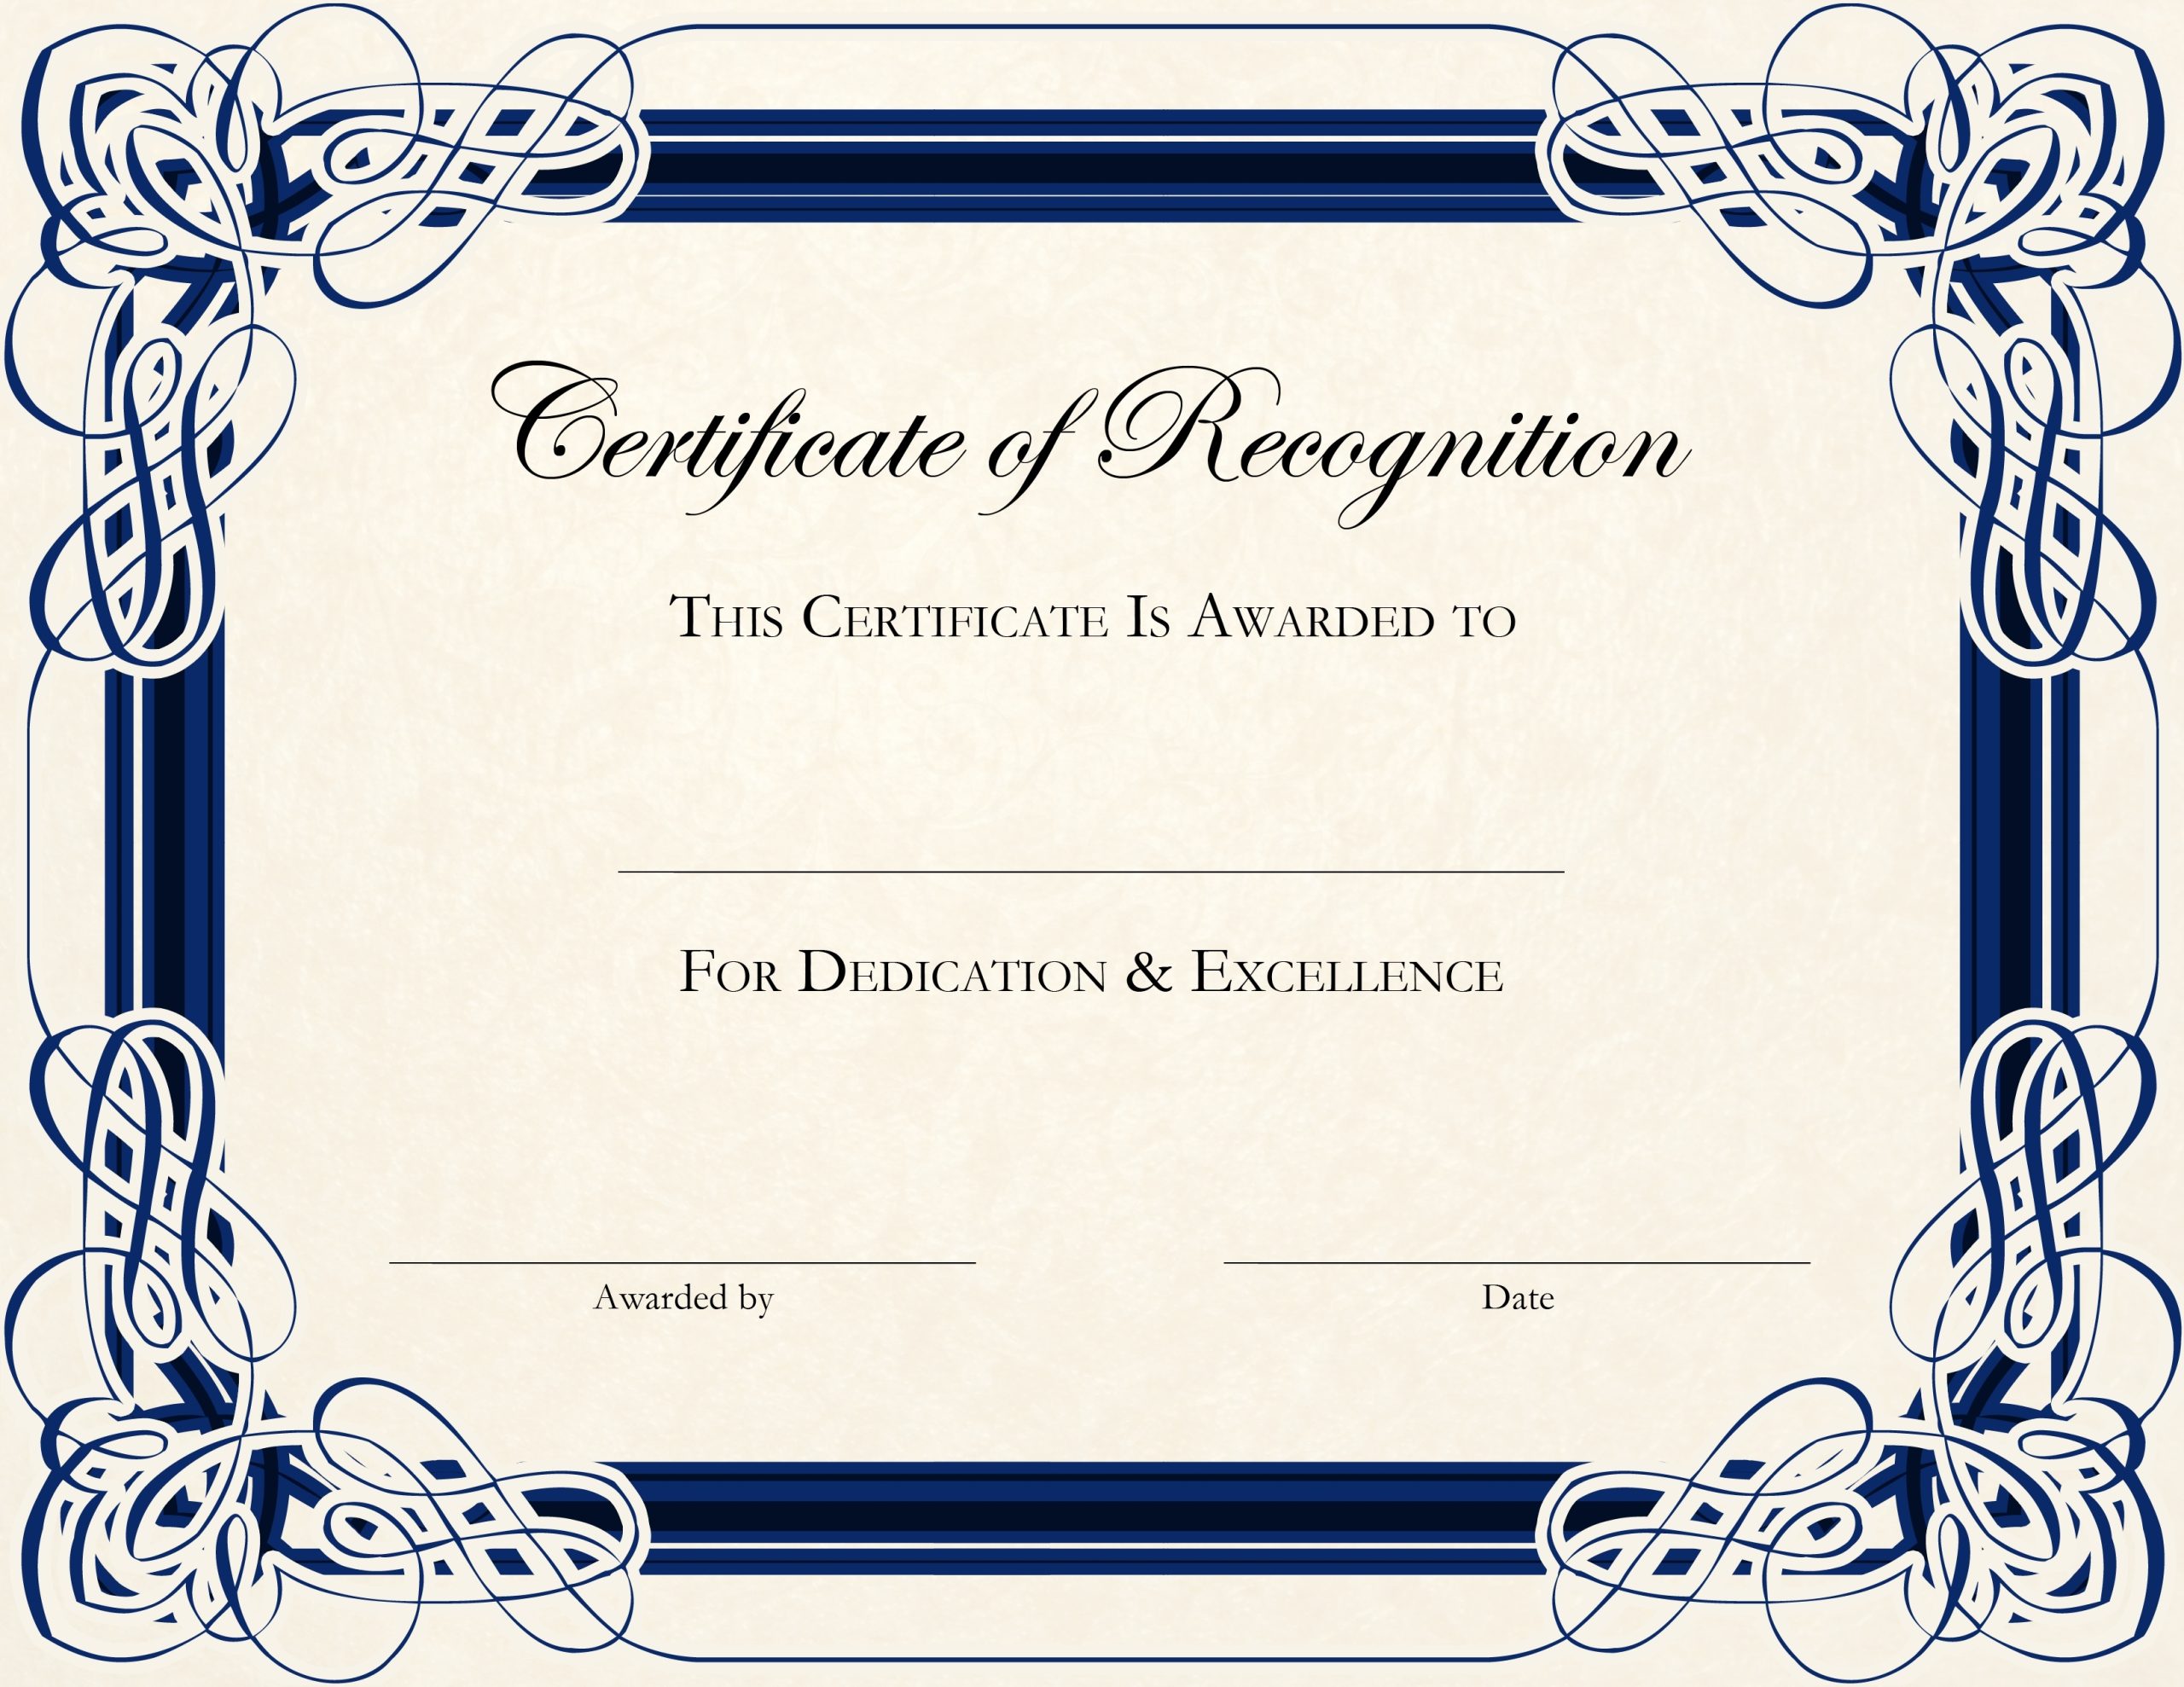 Certificate Of Appreciation Template Word - Task List Templates with regard to Gratitude Certificate Template